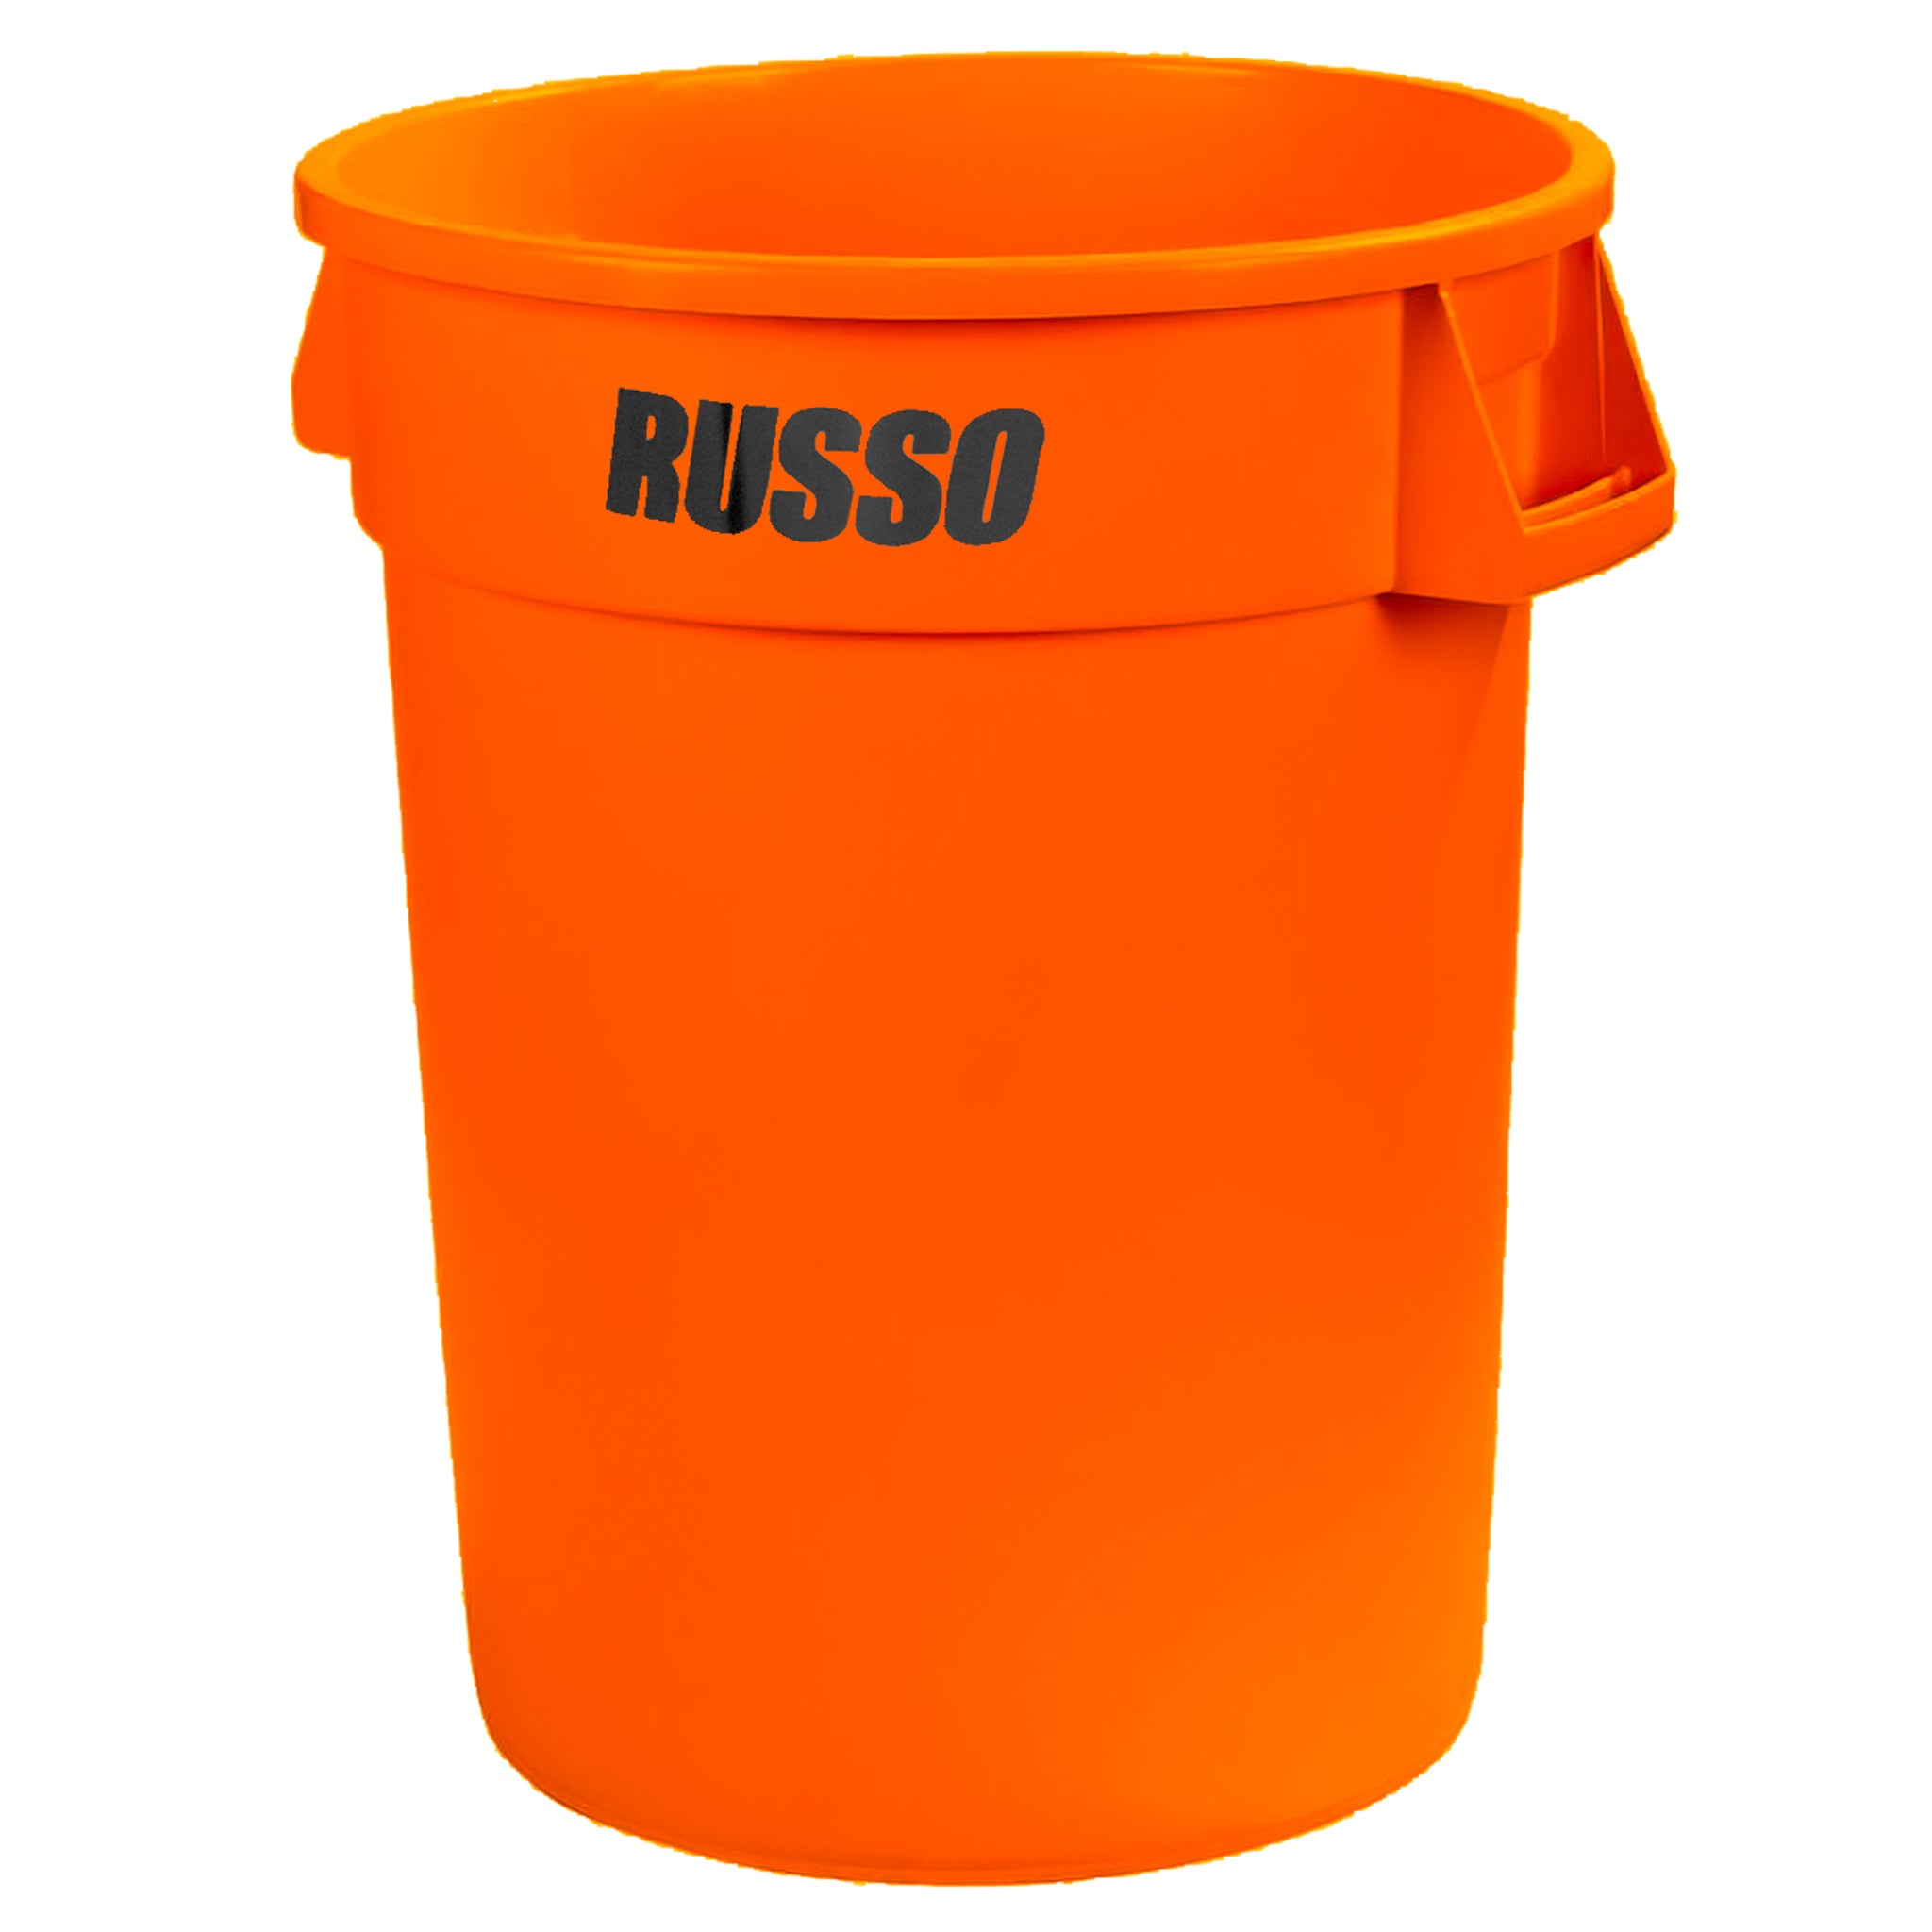 RUSSO Glow Garbage Can 44 Gallon - Orange